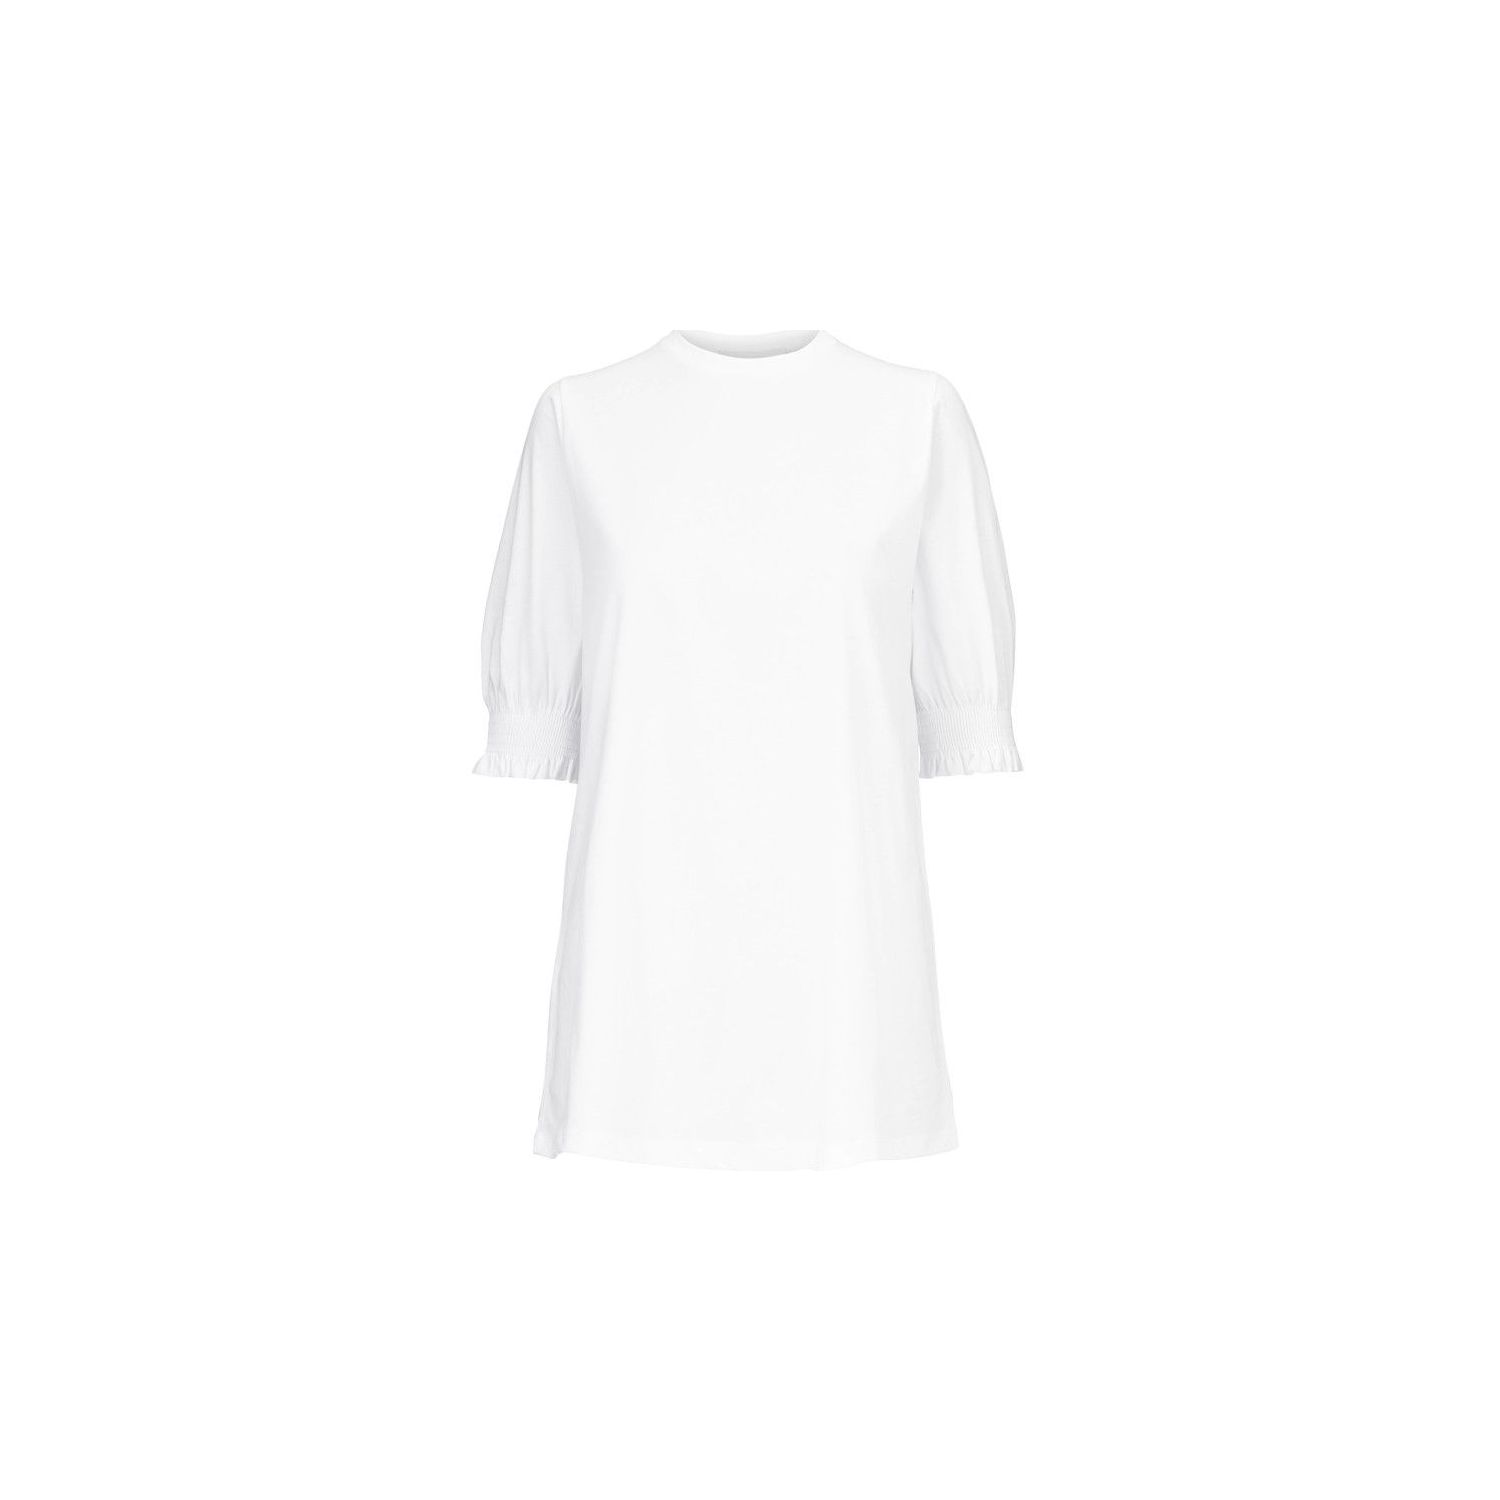 Modstrom jake t-shirt white